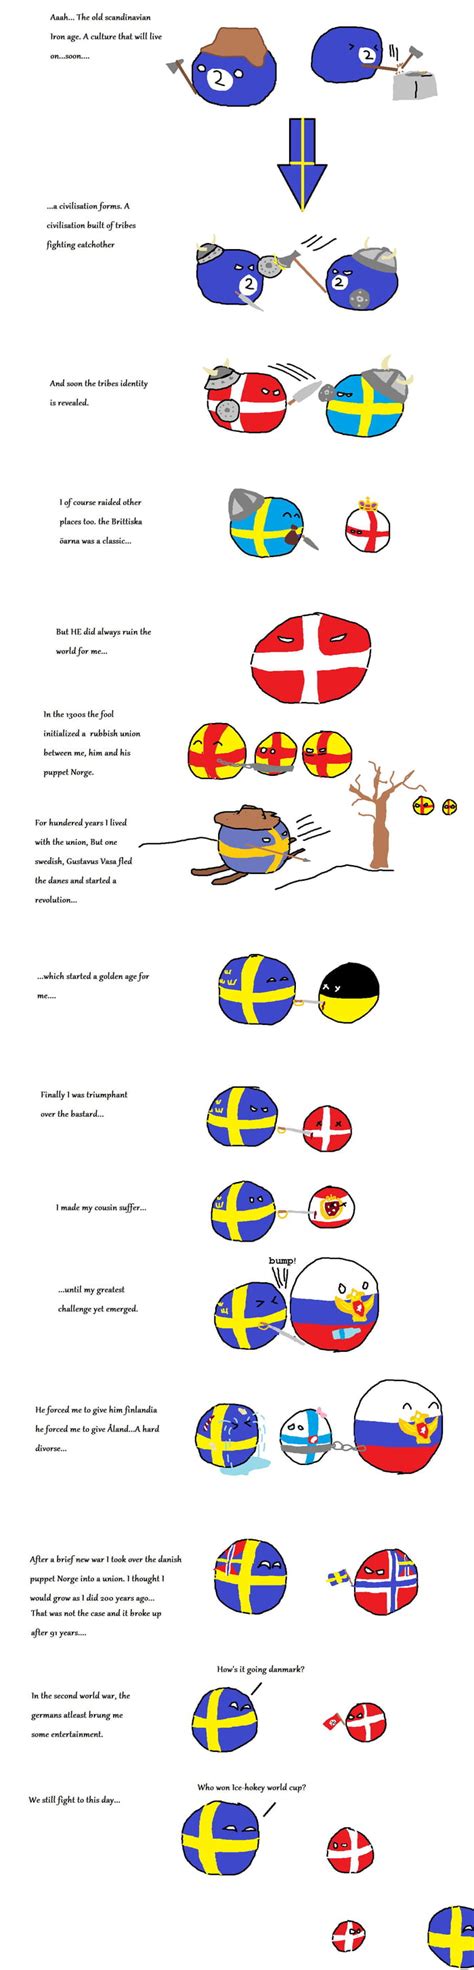 history of sweden 9gag